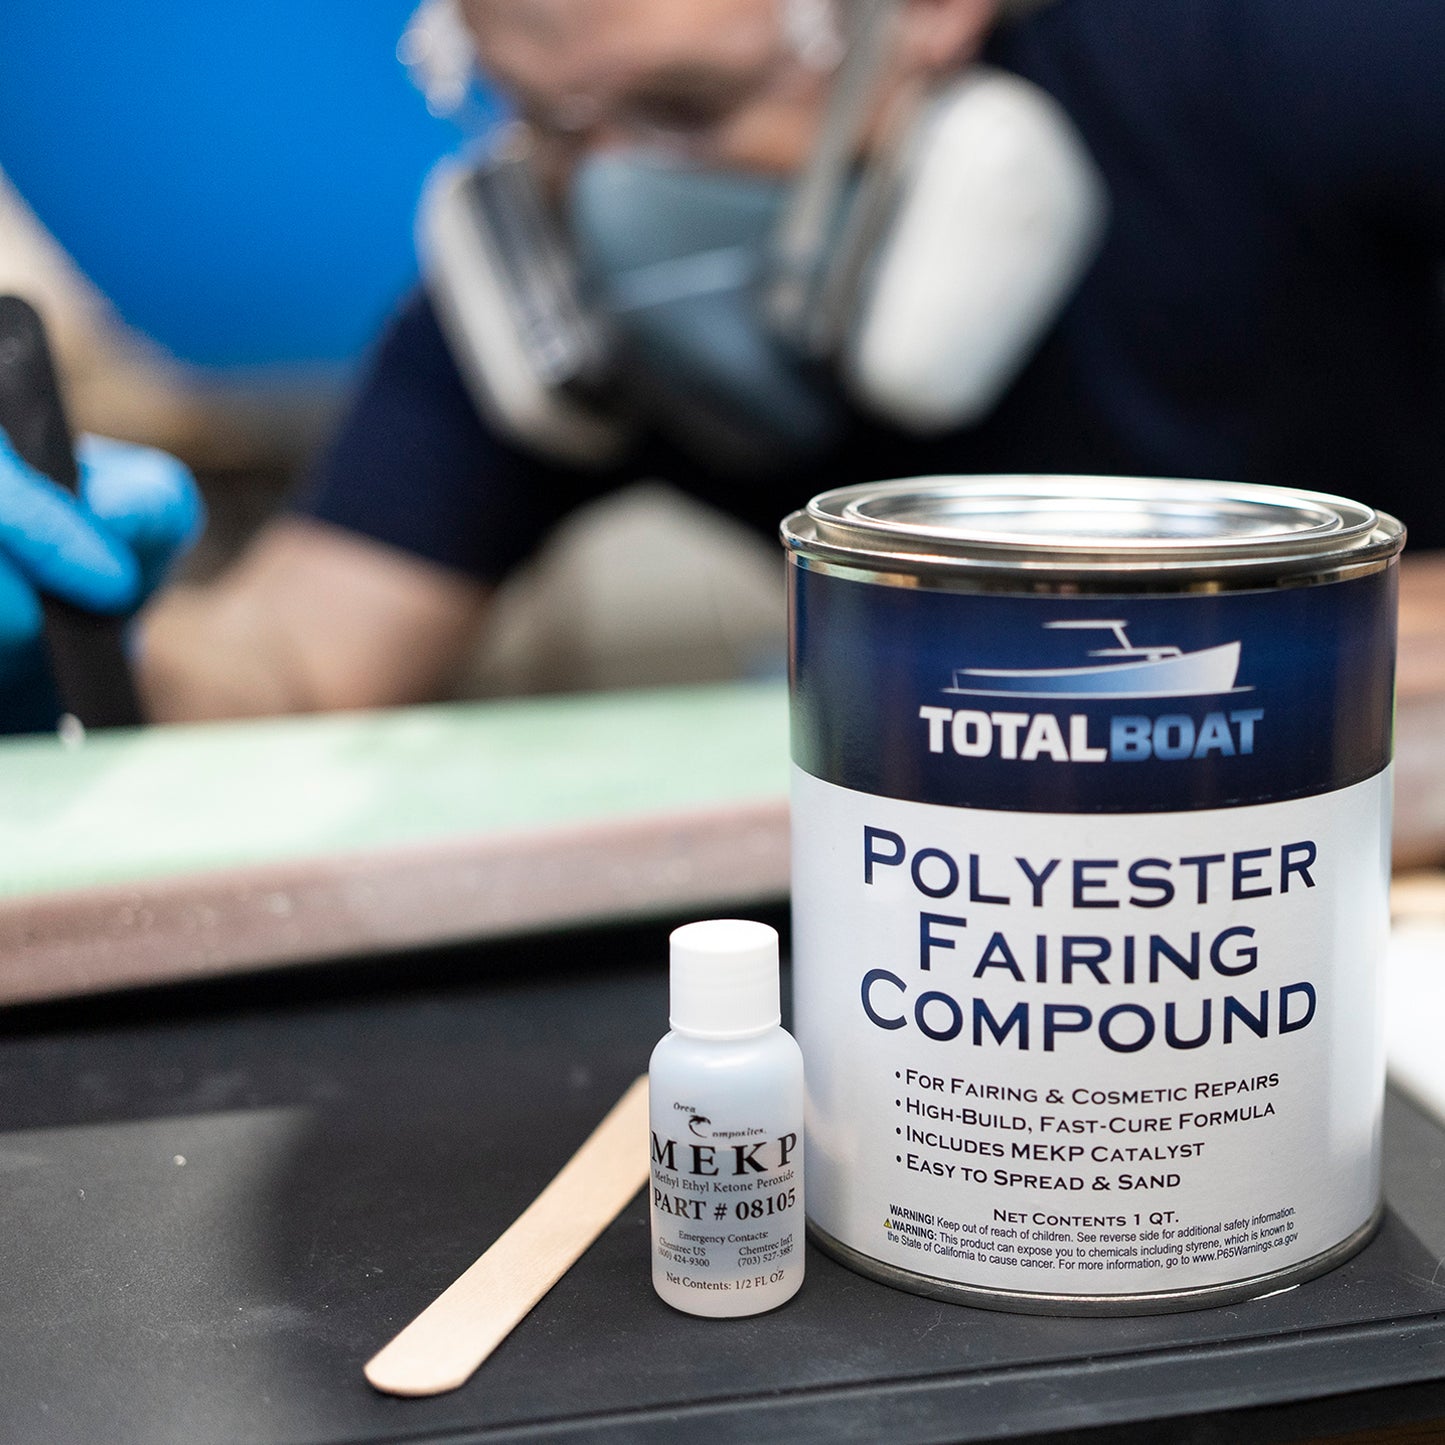 TotalBoat Polyester Fairing Compound Kit